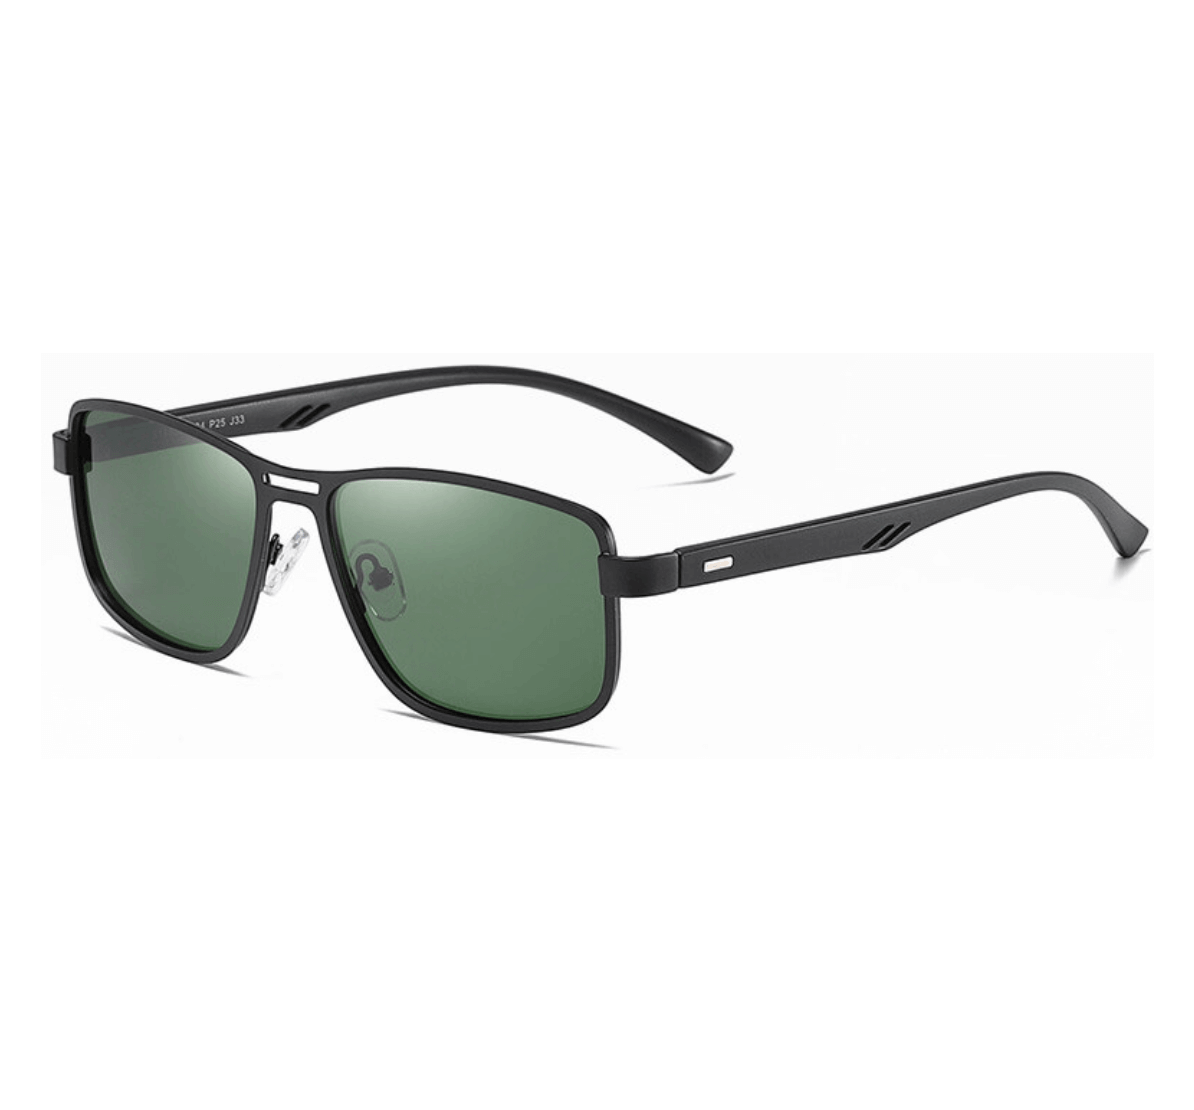 wholesale sunglasses polarized, custom sunglasses, metal aviator sunglasses green lens, wholesale polarized sunglasses China, bulk polarized sunglasses, sunglasses factory